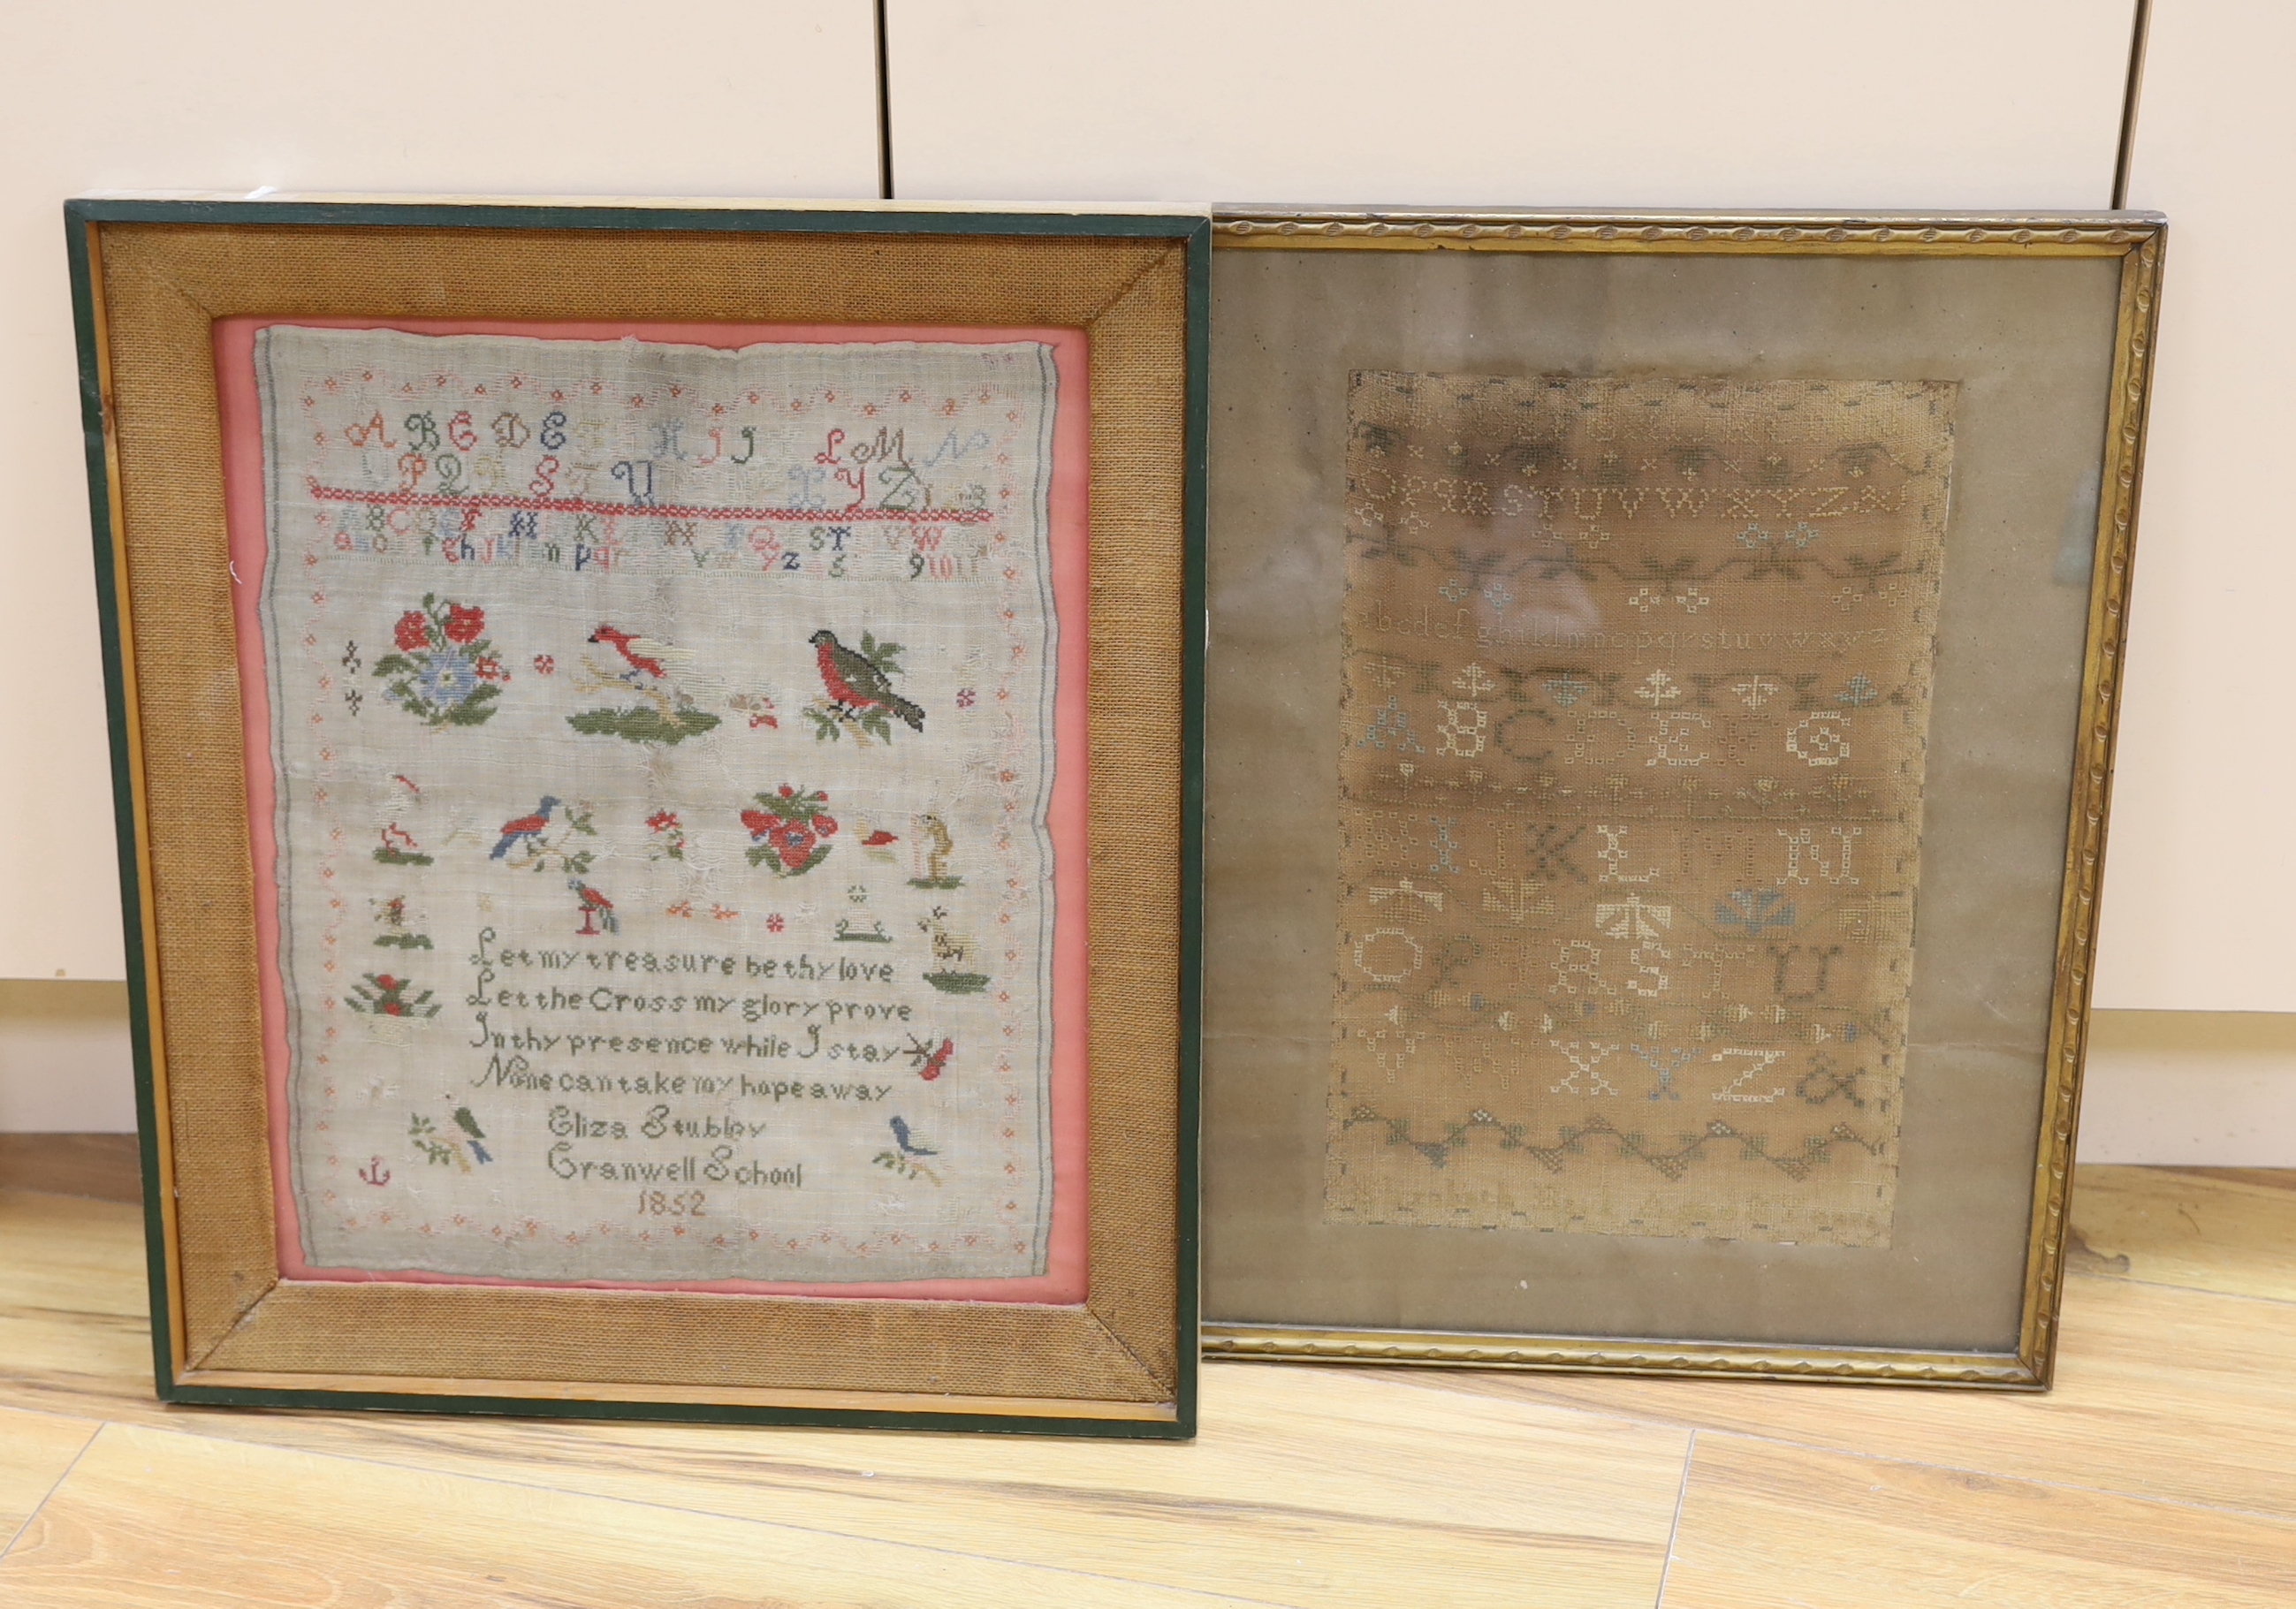 Two framed 19th century samplers, including Eliza Stubley, Cranwell School 1852